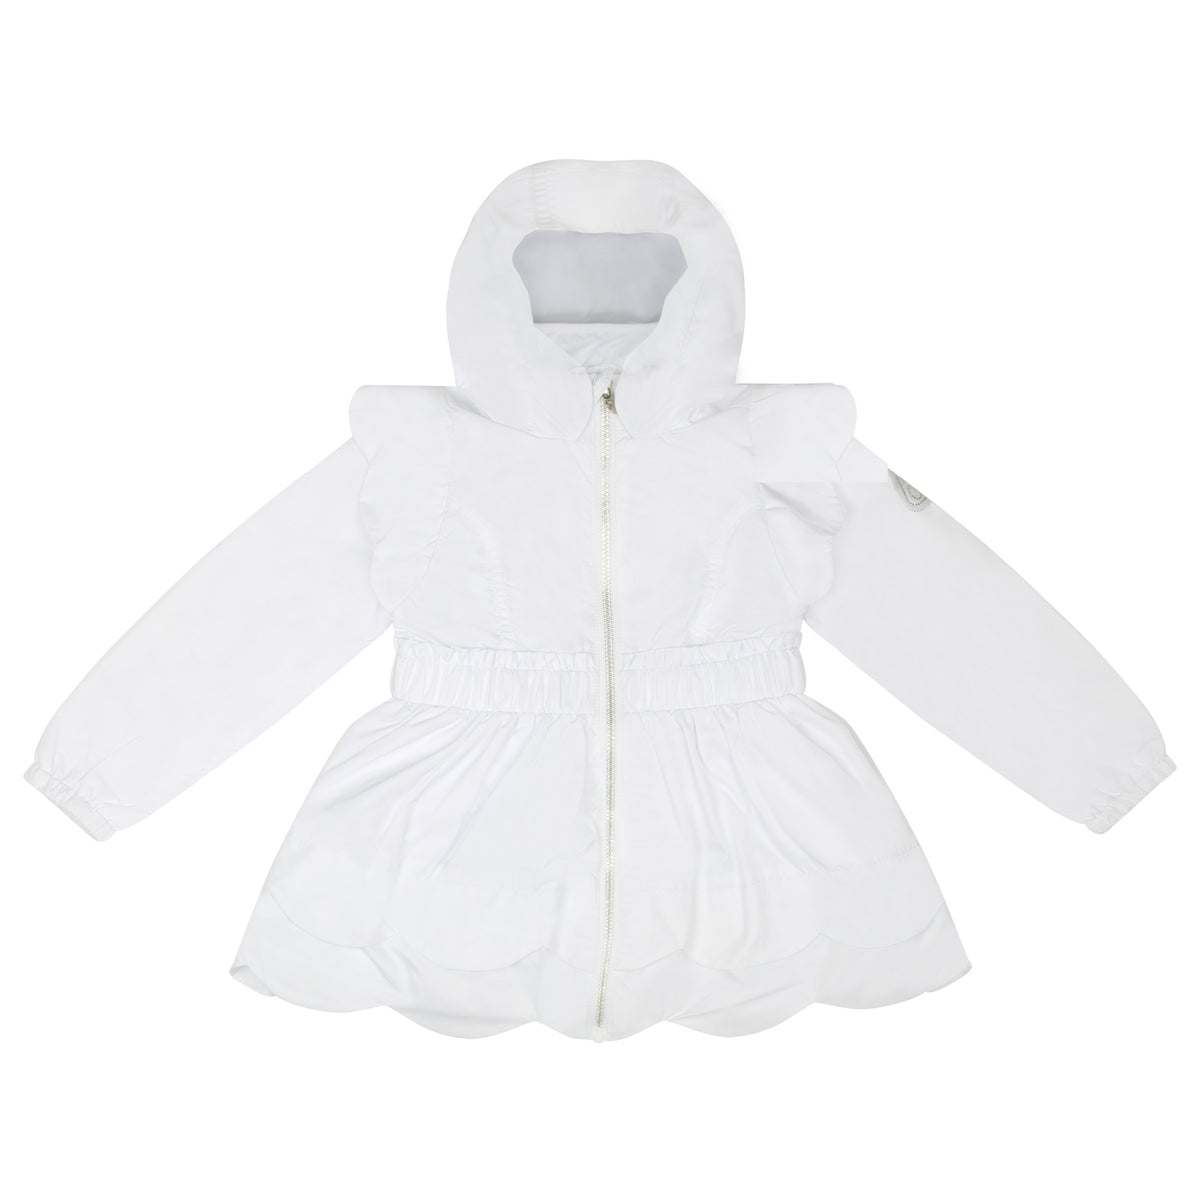 A Dee Girls 'Ocean' White Scallop Jacket